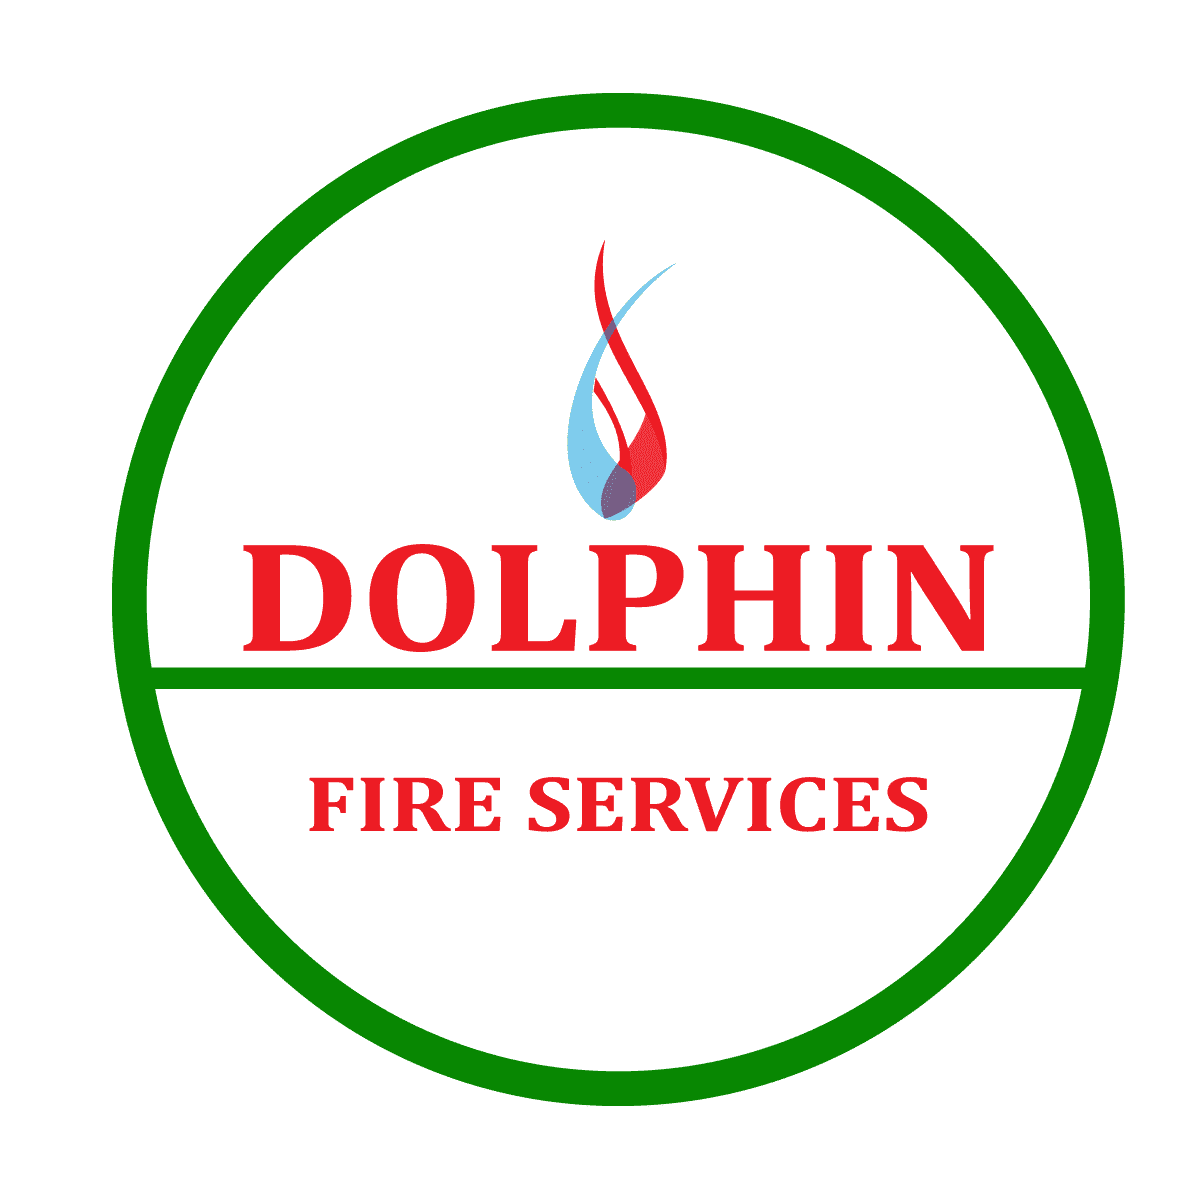 Dolphin Fire Services Pvt Ltd